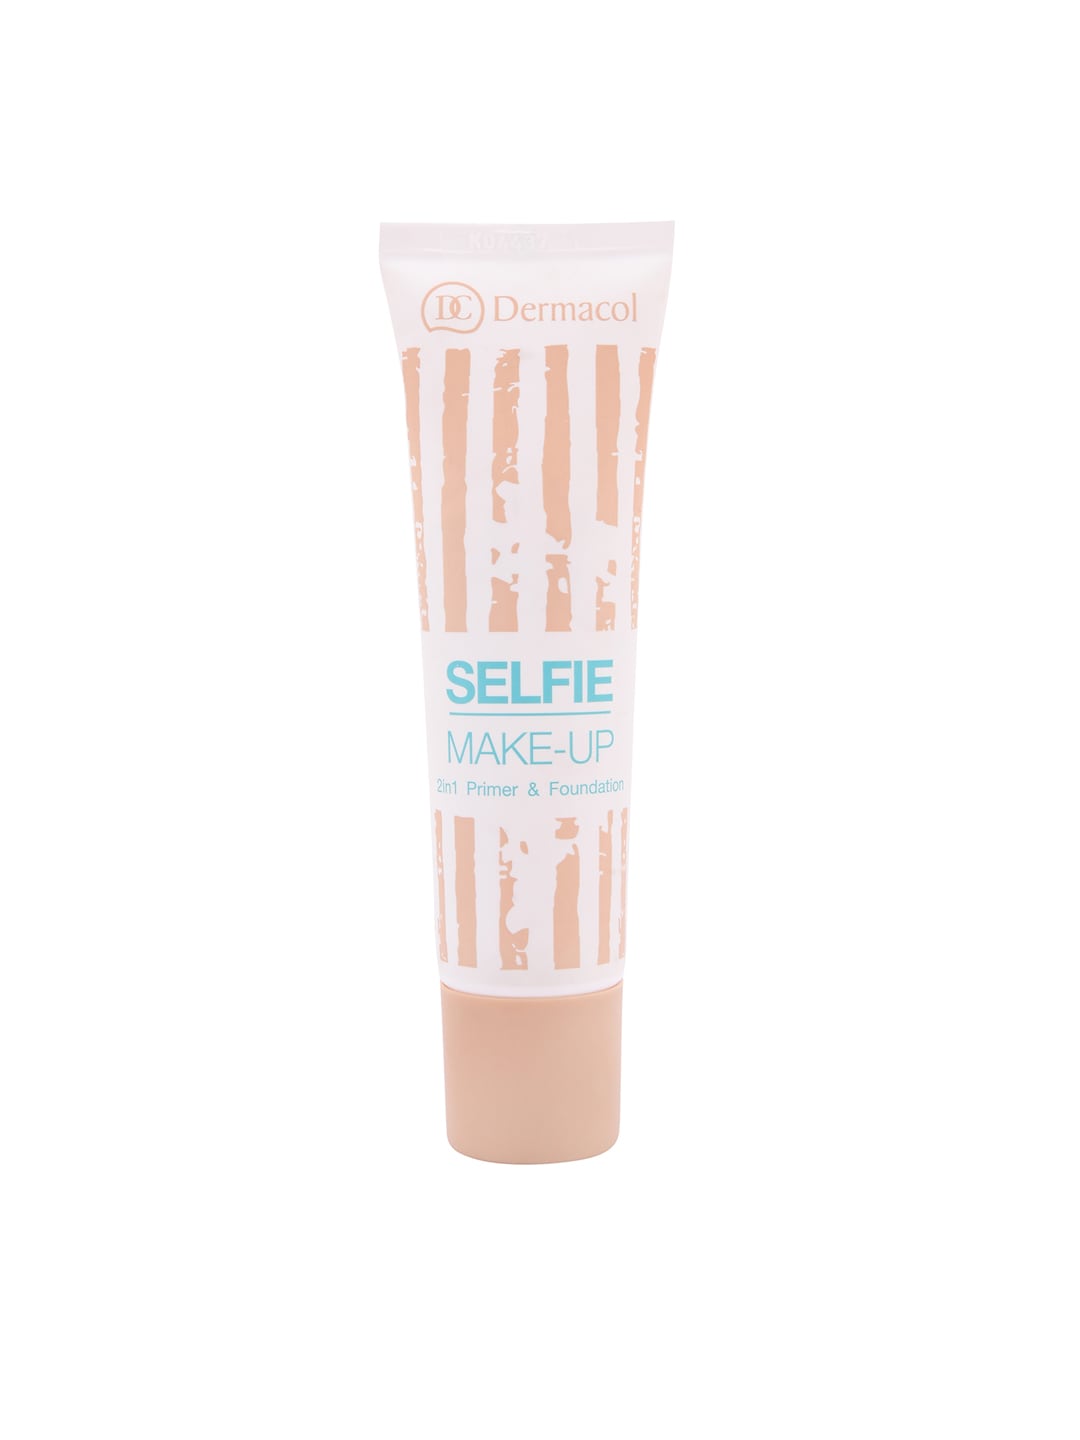 Dermacol Selfie Make-up 2in1 Primer & Foundation Nude 02 - 25 ml Price in India